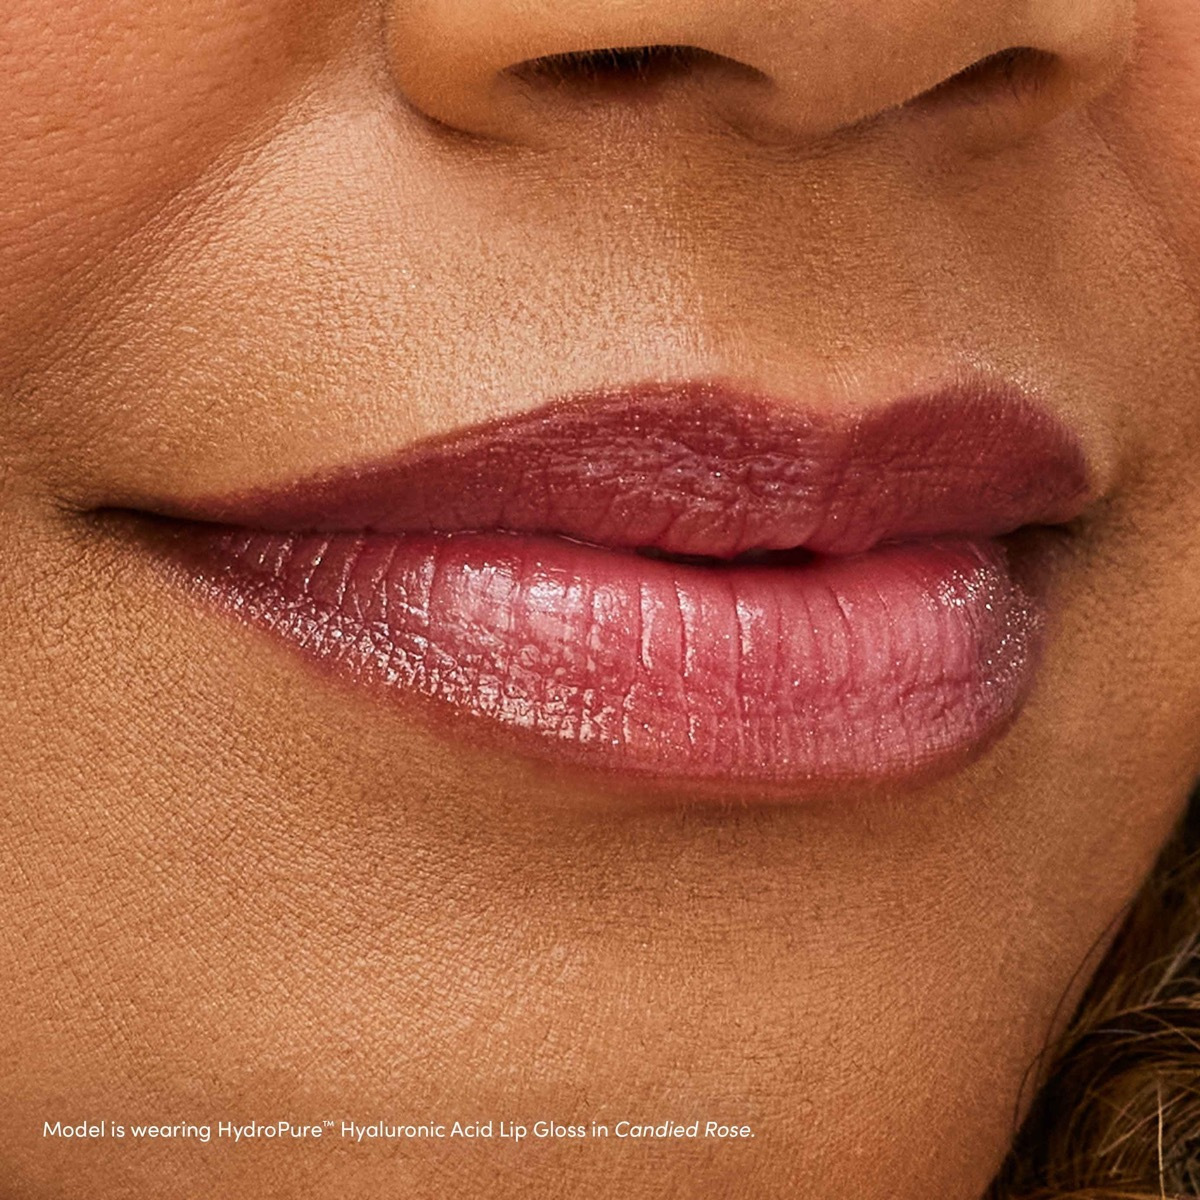 Chanel Rouge Coco Lip Gloss 722 Noce Moscata 5.5ml